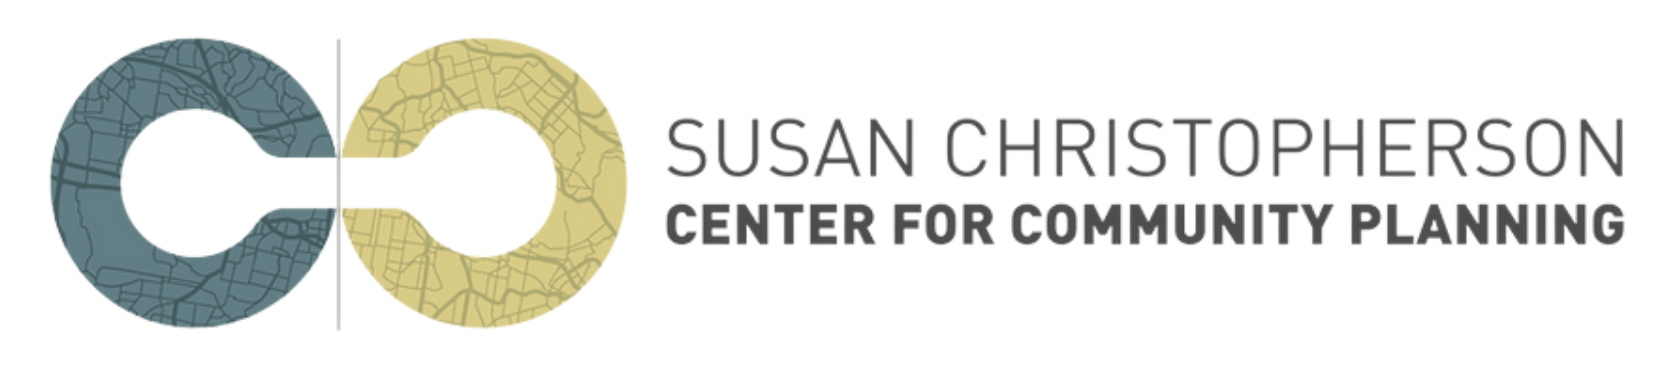 Susan Christopherson Center for Community Planning Web Link